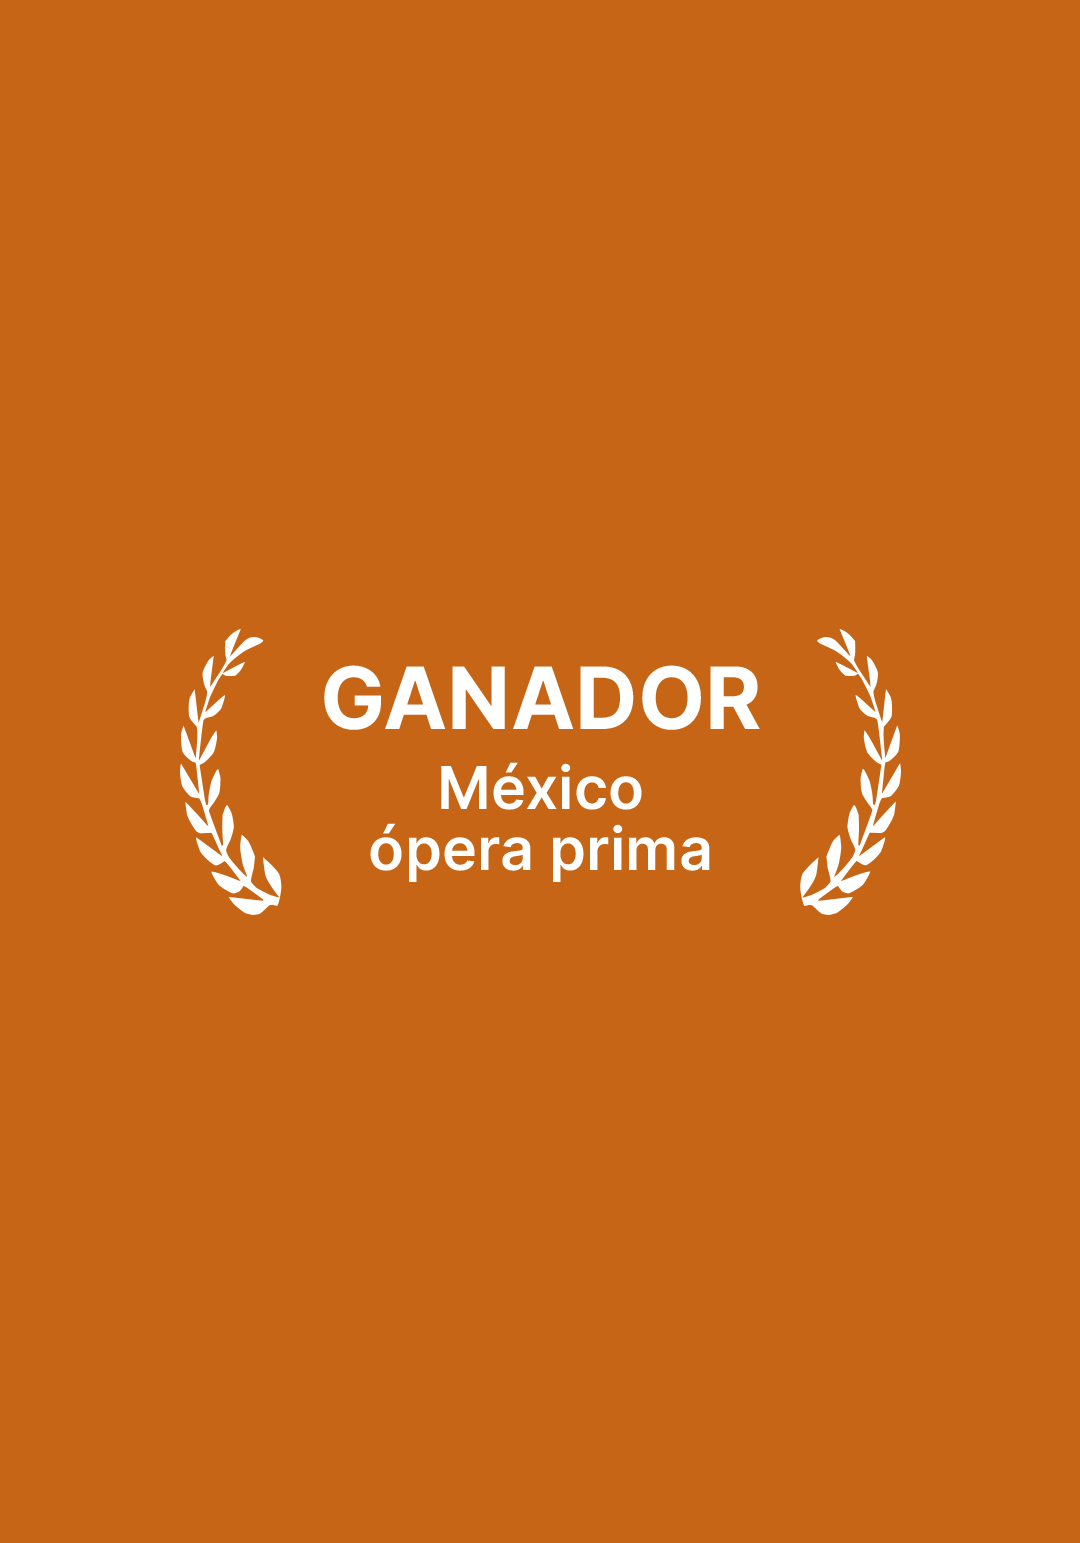 Ganador México ópera prima, por día, cineteca nacional, 18 docsmx